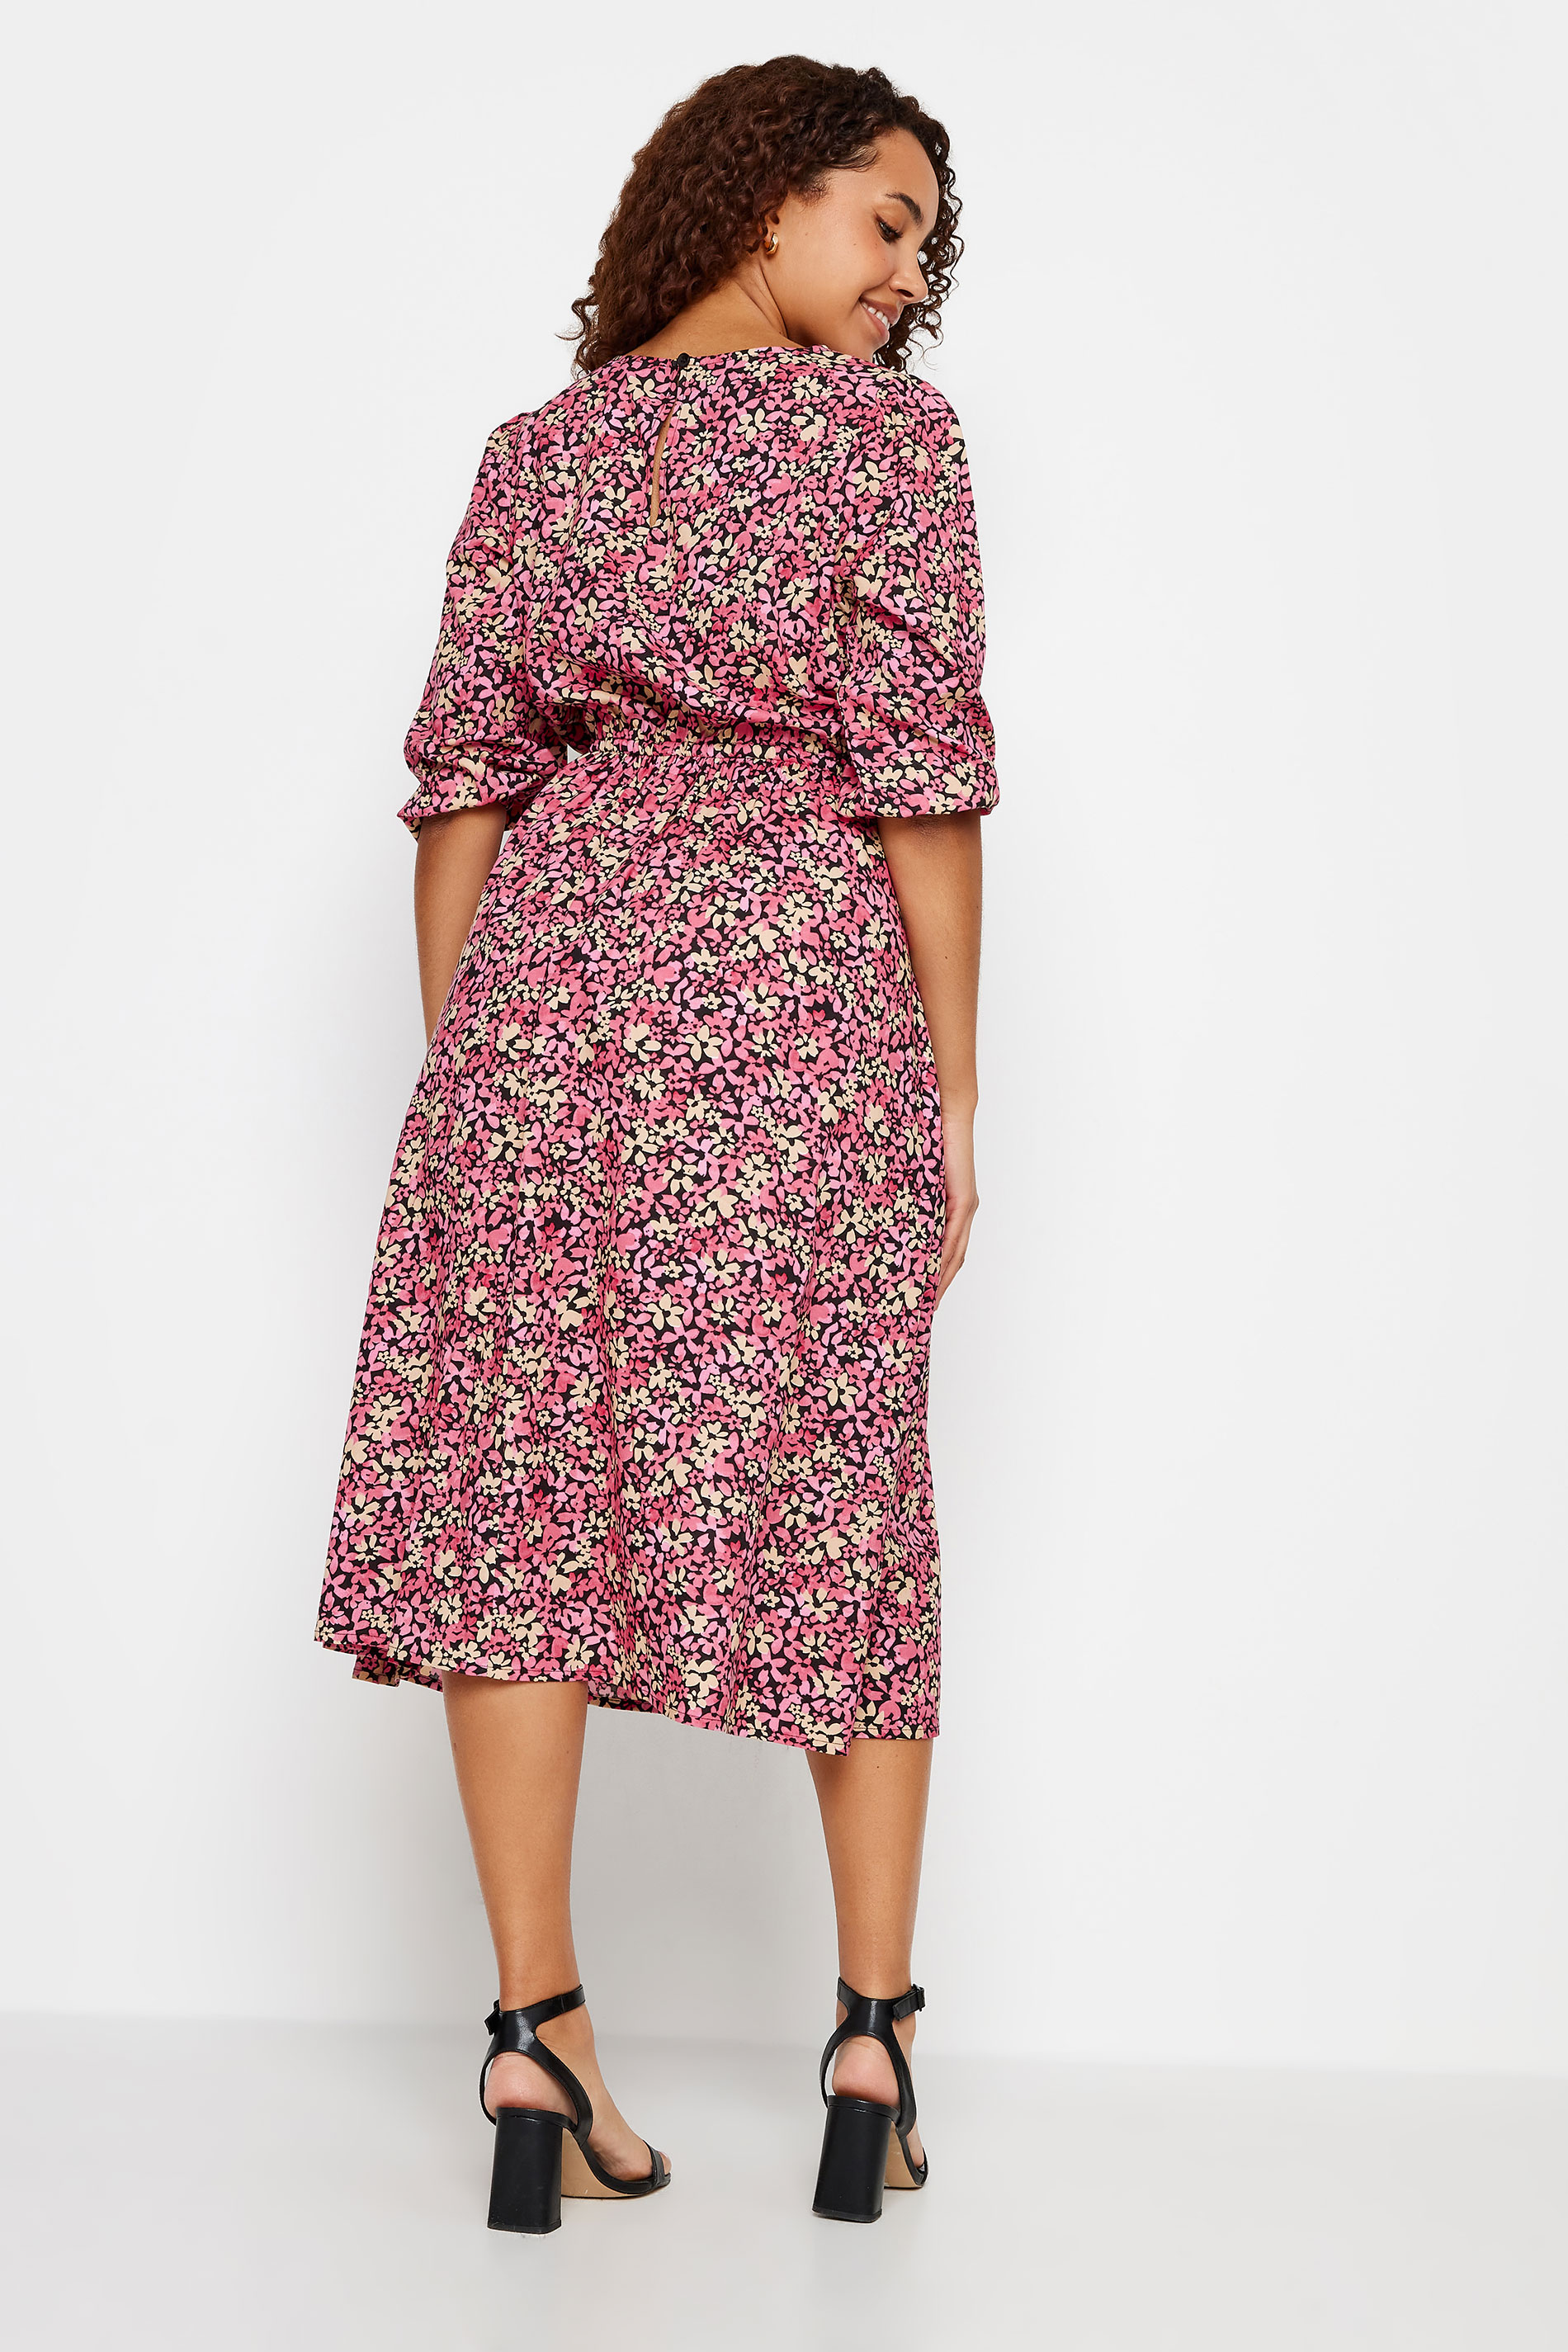 M&Co Pink Floral Shirred Waist Long Sleeve Midi Dress | M&Co 3